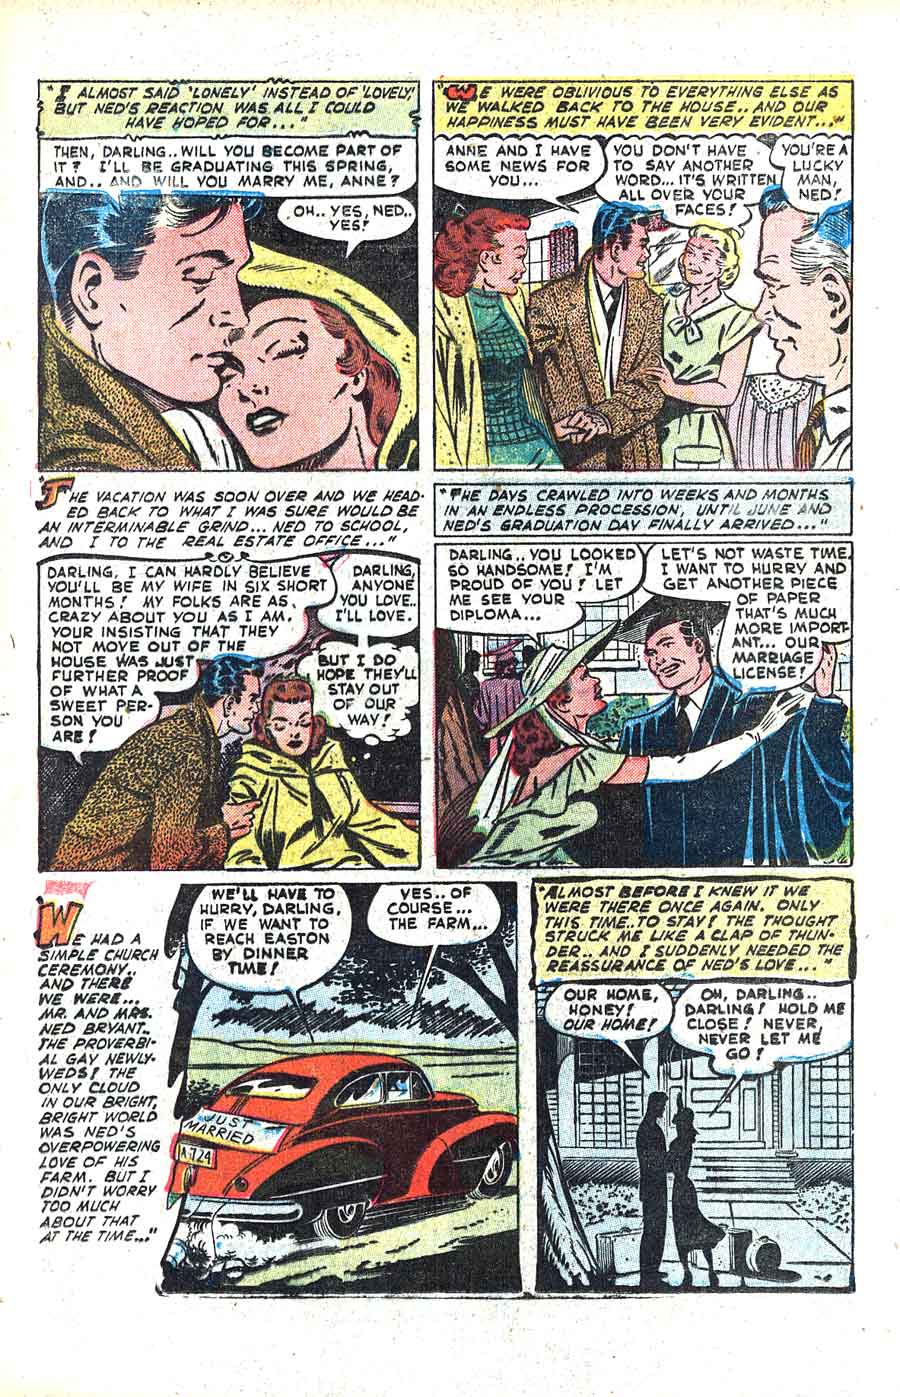 Pictorial Romances #11 st. john golden age 1950s romance comic book page art by Matt Baker